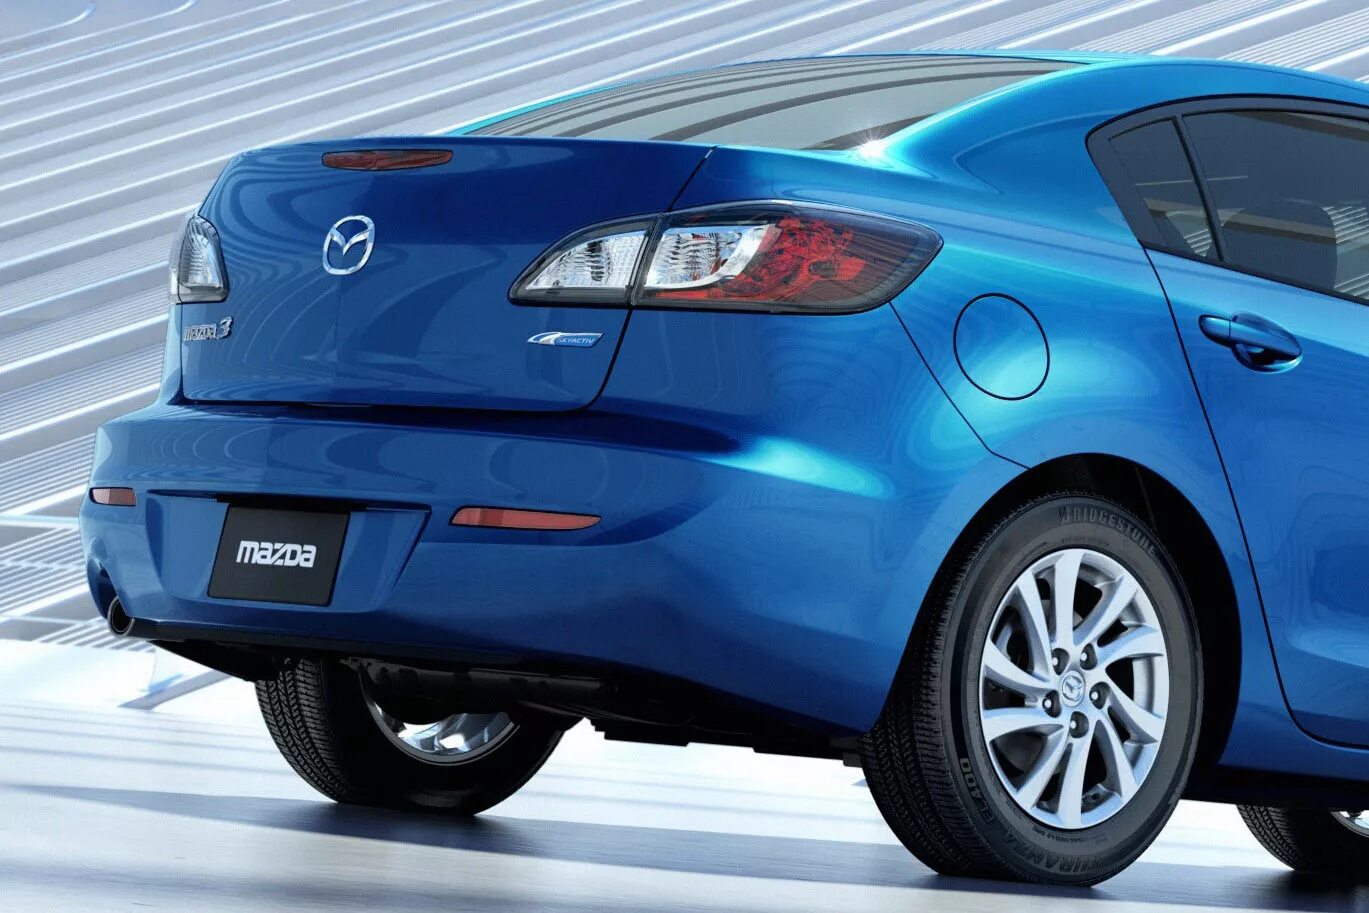 Mazda 3 2012. Мазда 3 седан 2011. Mazda 3 2012 седан. Мазда Аксела 2012. Mazda 3 шины